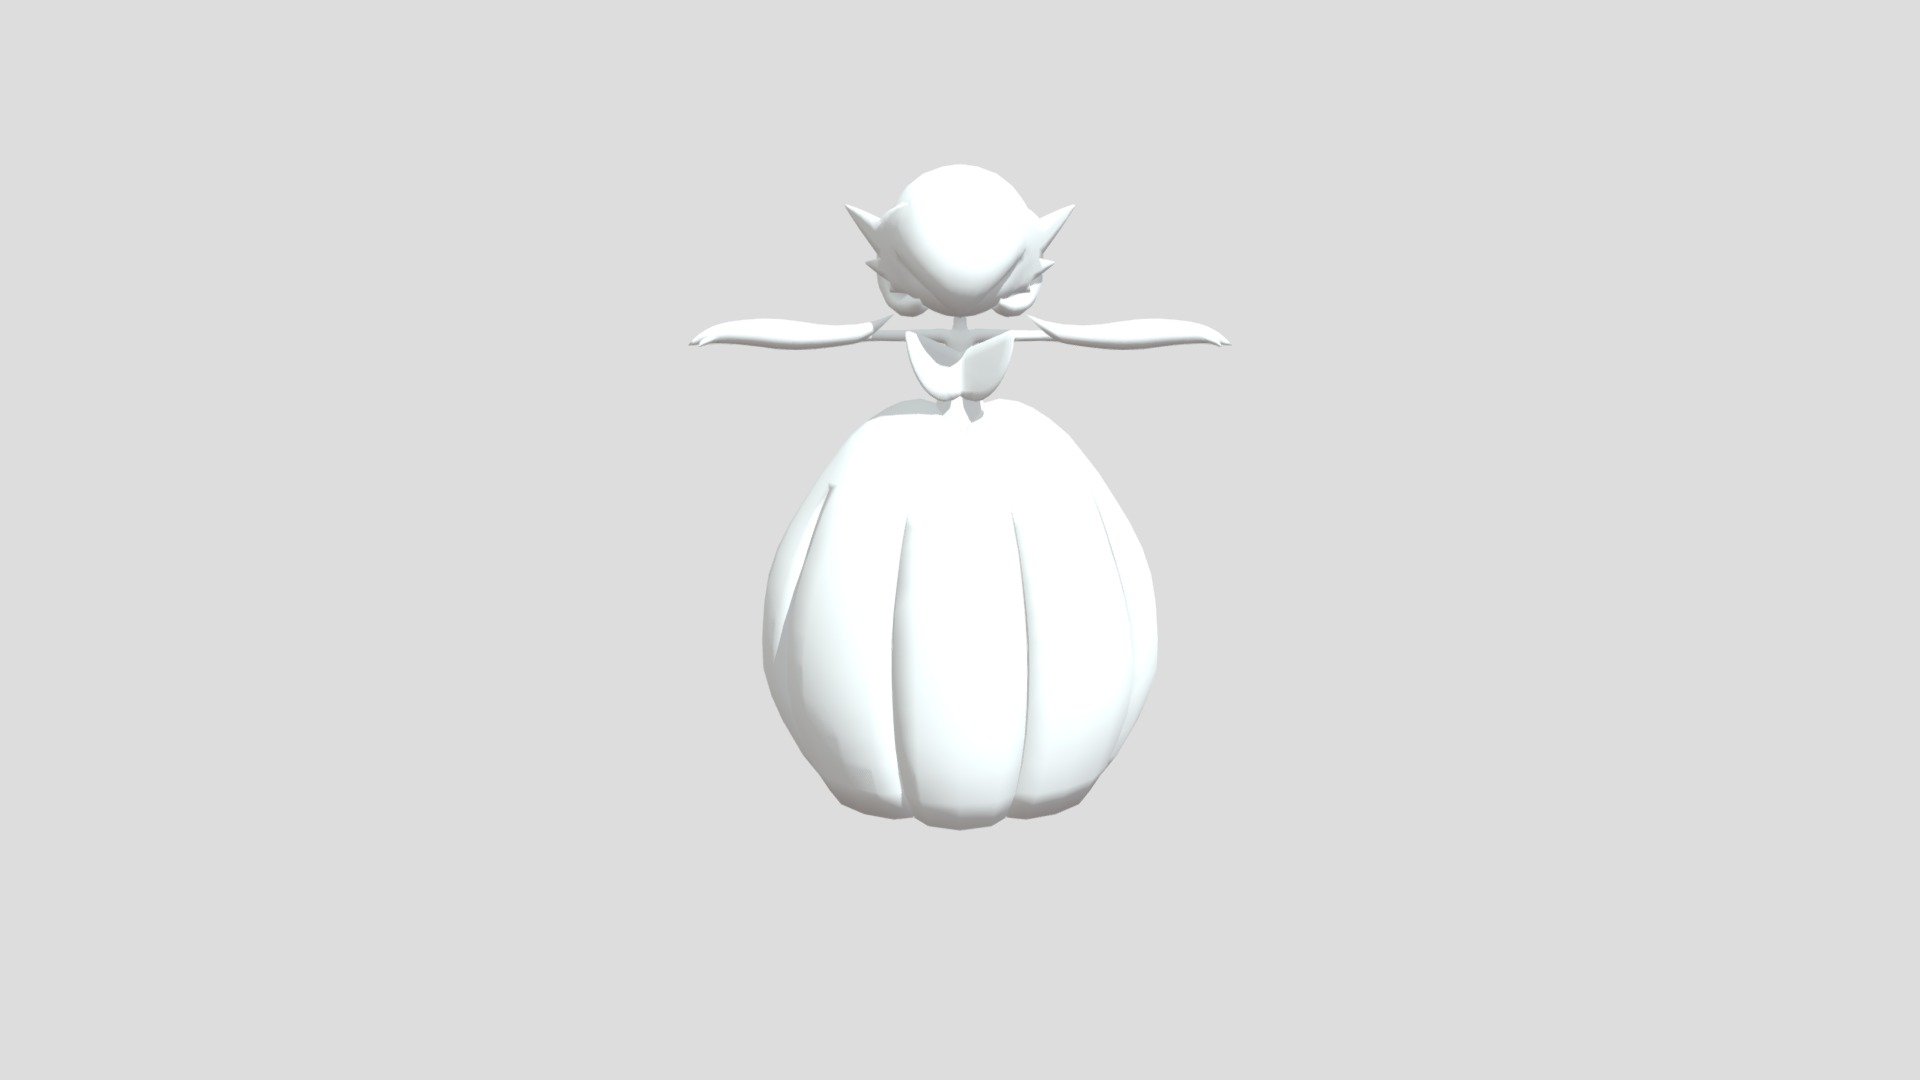 Shiny Mega Gardevoir - 3D model by xdcaiooo (@xdcaiooo) [091a7a2]